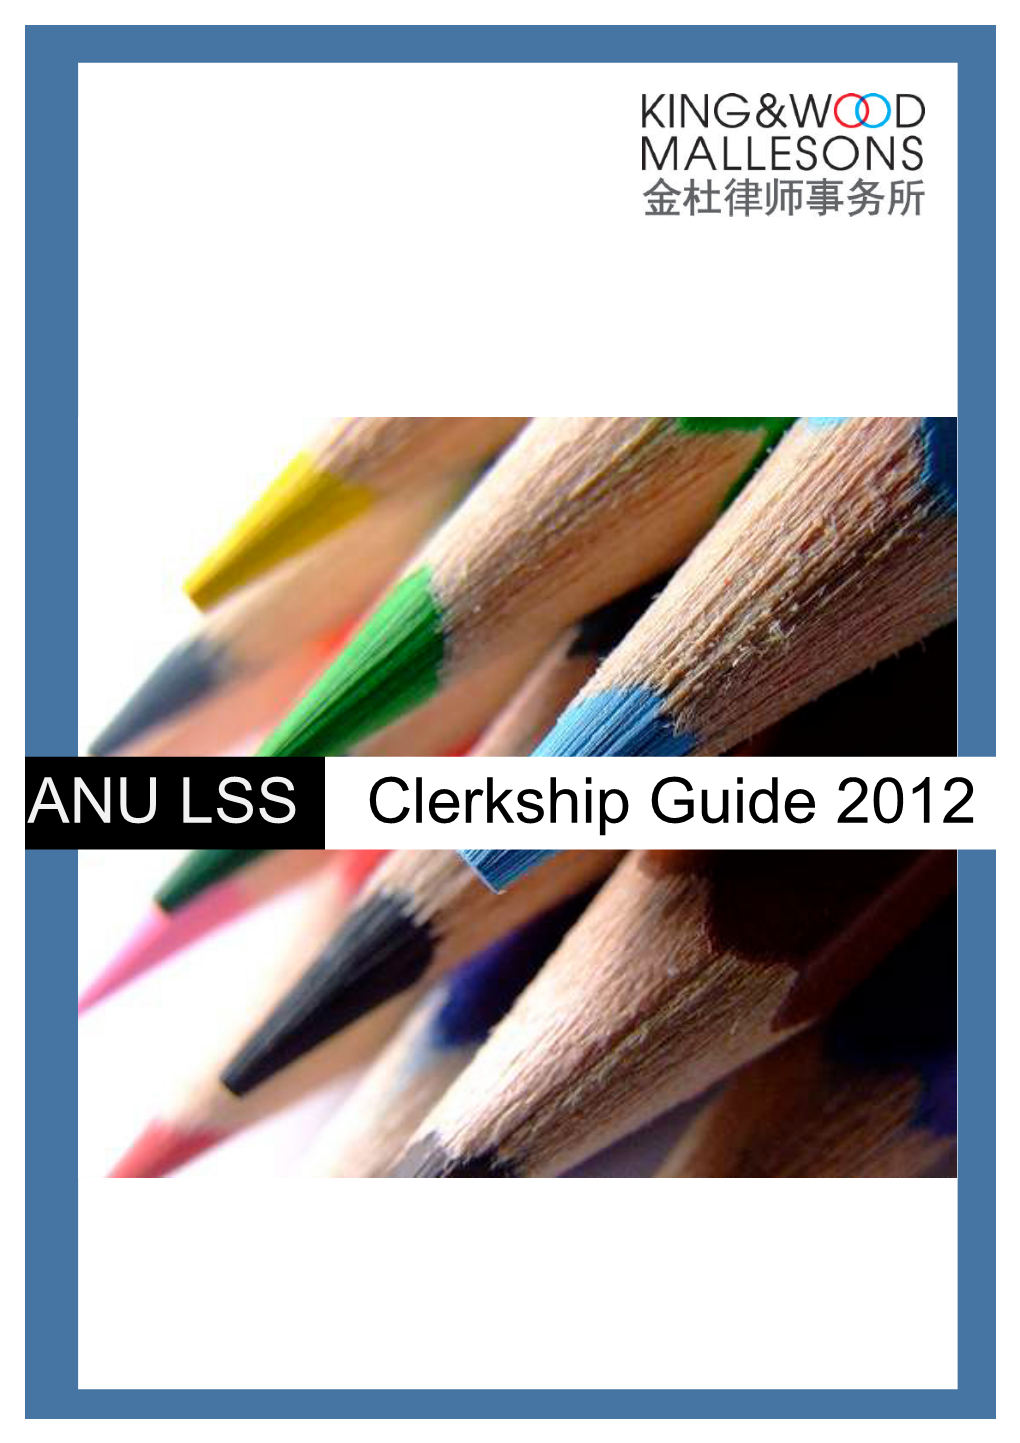 Ship Guide 2012